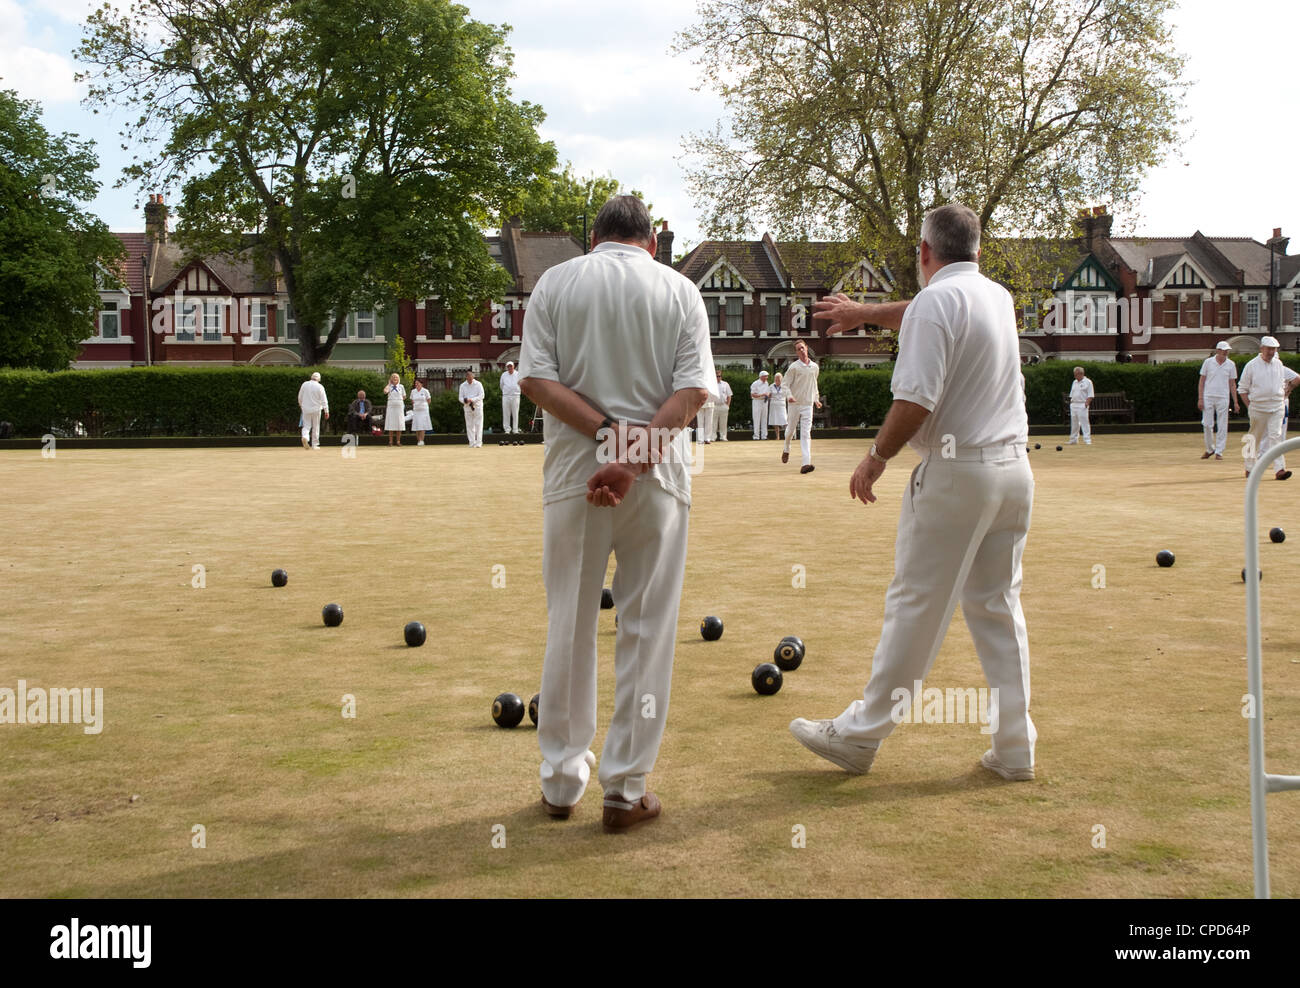 teams of bowlers playing lawn bowls at east ham bowls club London e6 Stock Photo